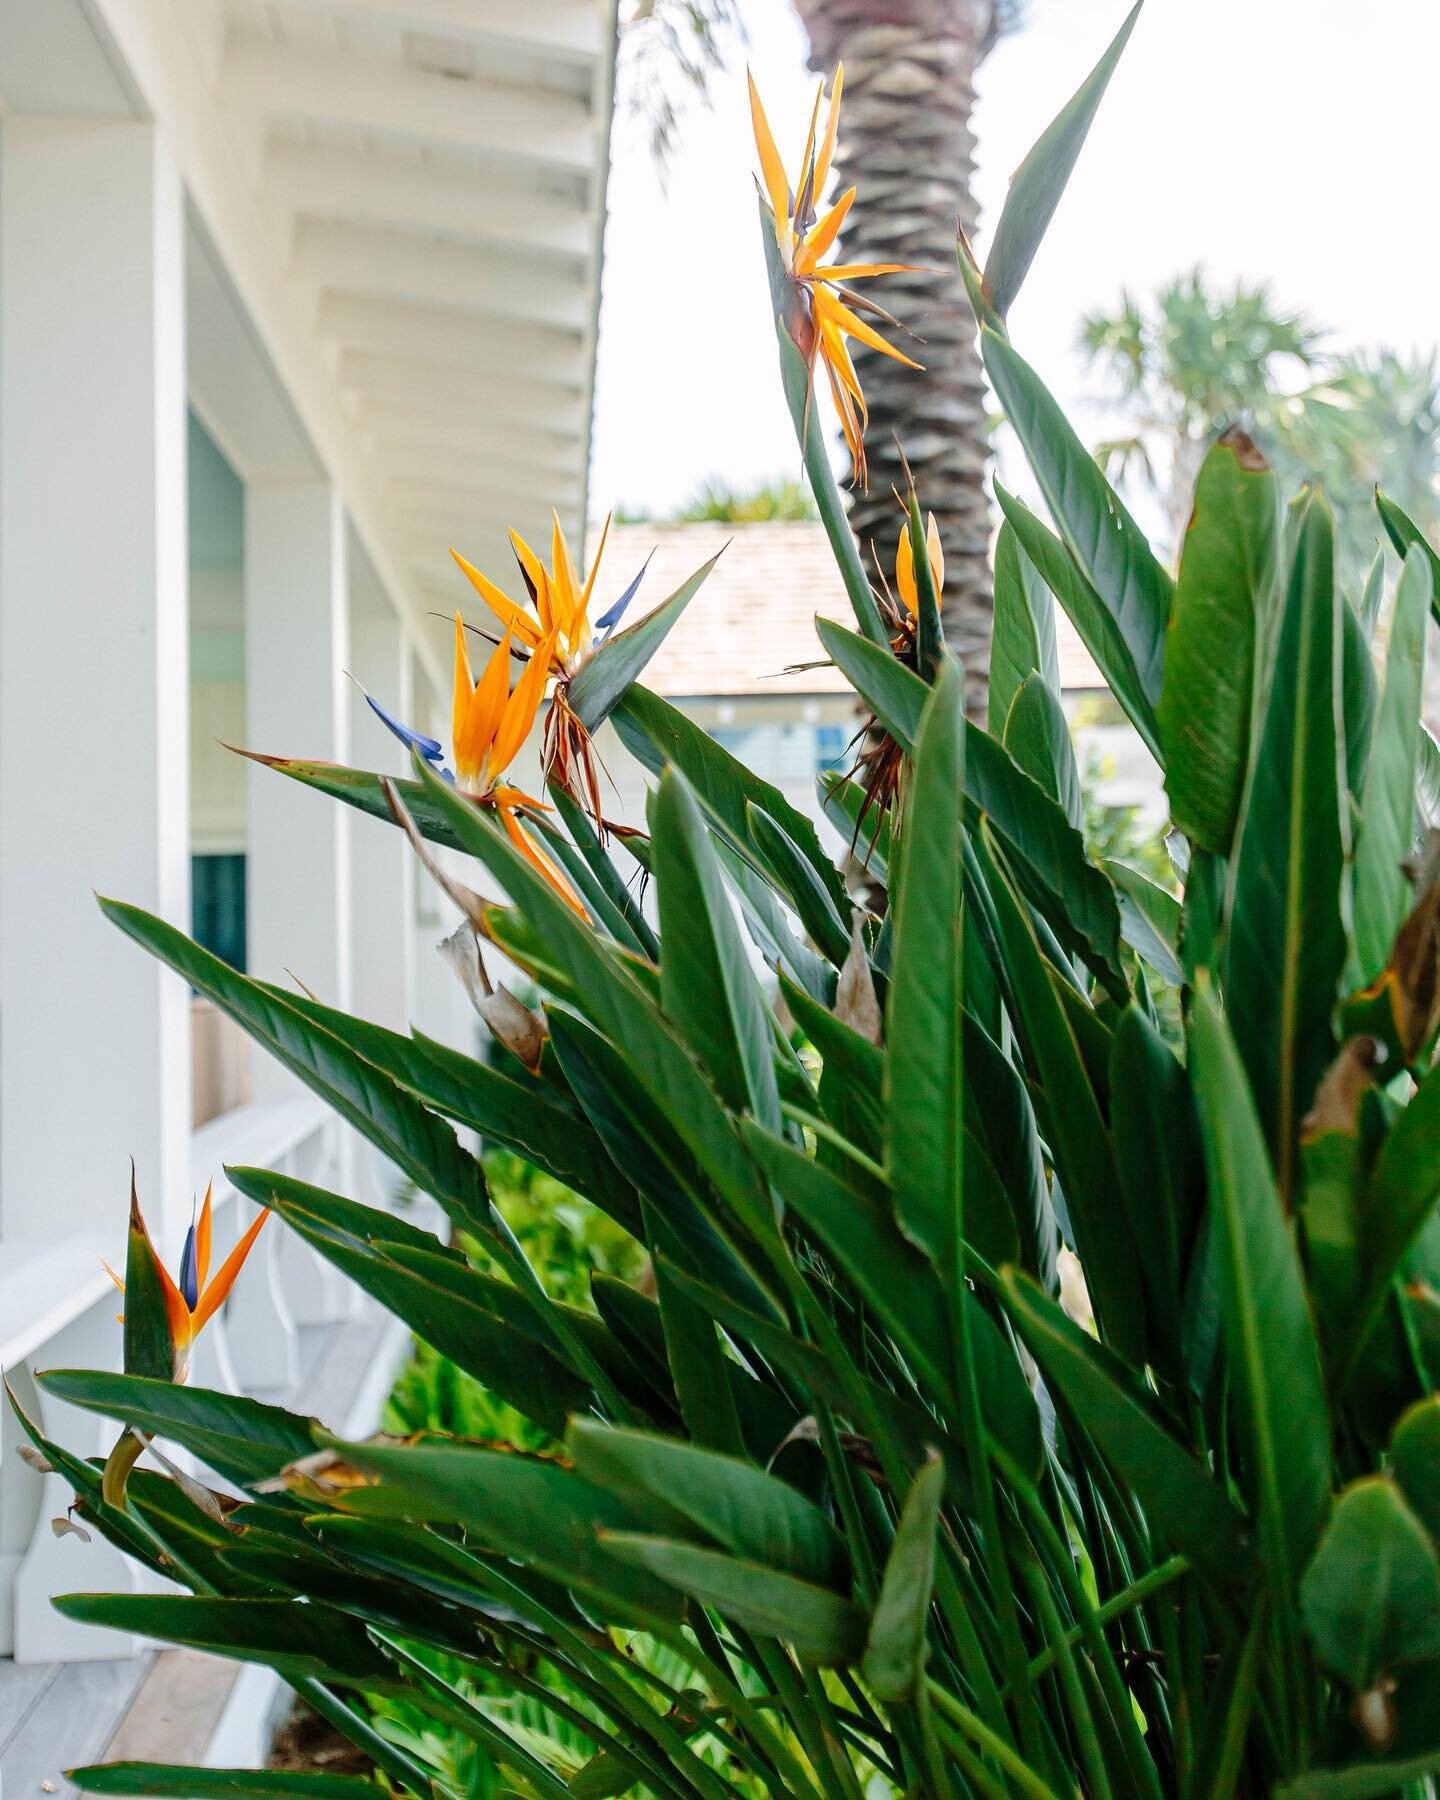 Orange Bird of Paradise in full bloom at an ocean front residence! 🌴#seaislandlandscape